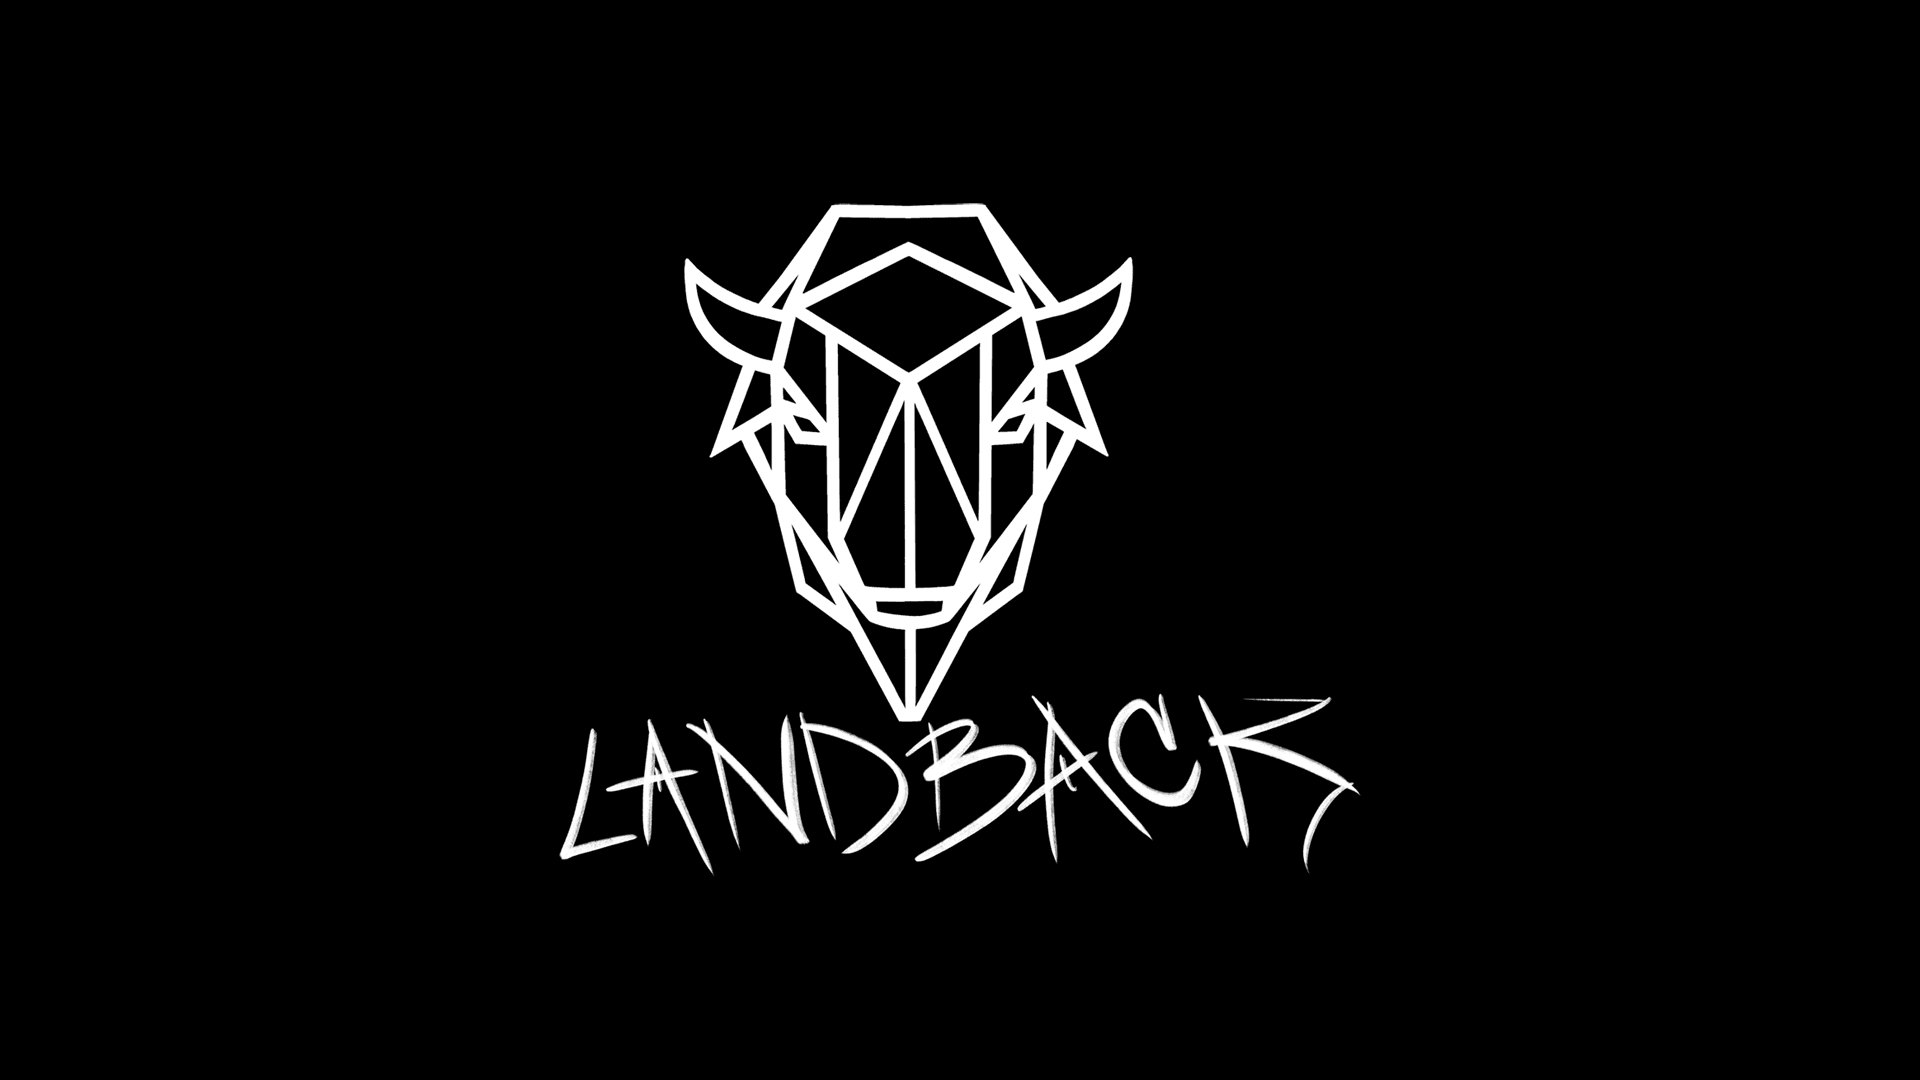 LandBack